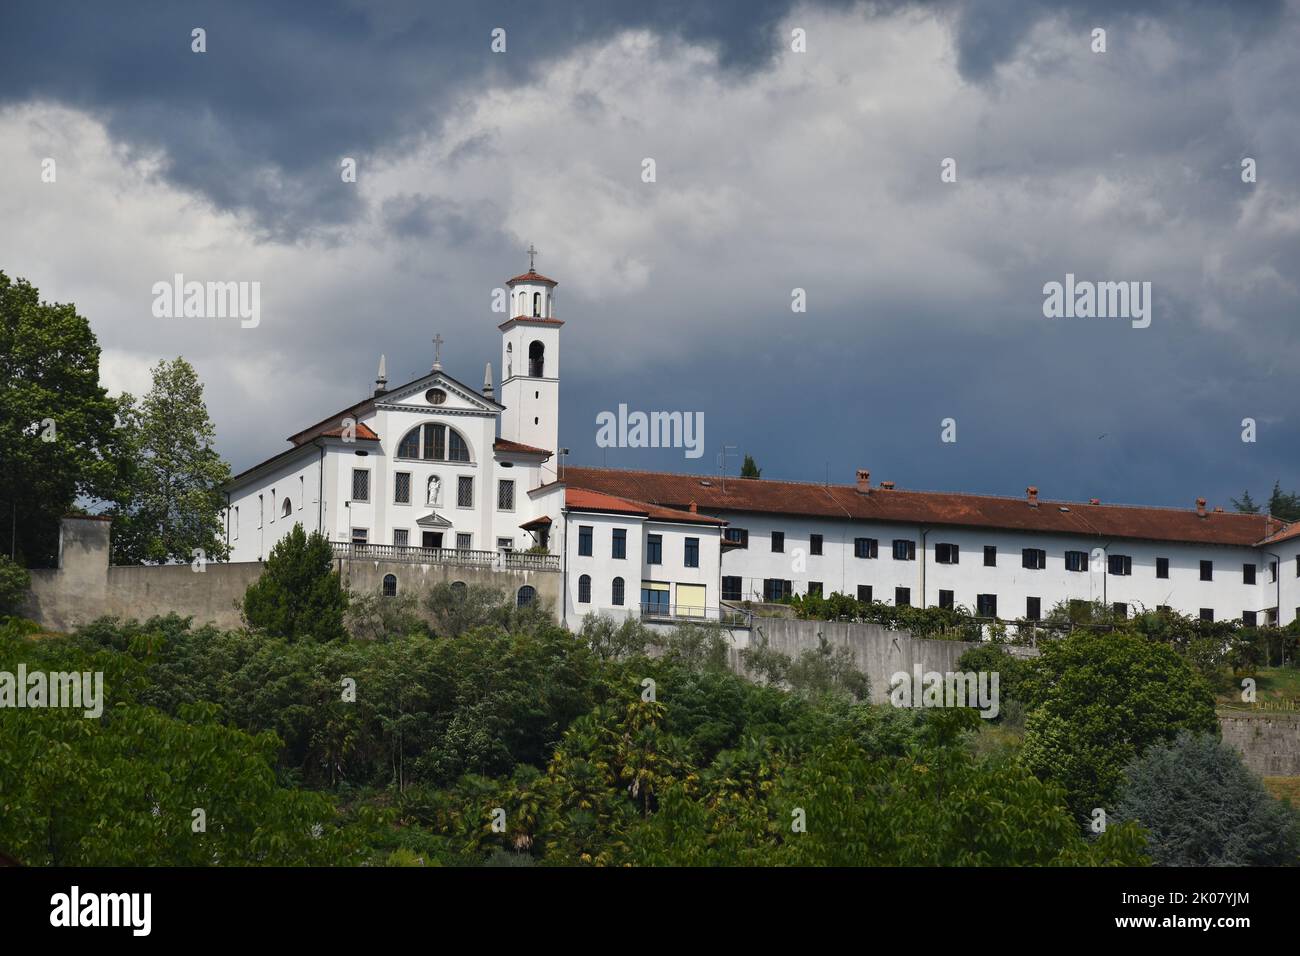 The monastery of Kostanjevica in Nova Gorica, Slovenia. Border with Gorizia, Italy Stock Photo